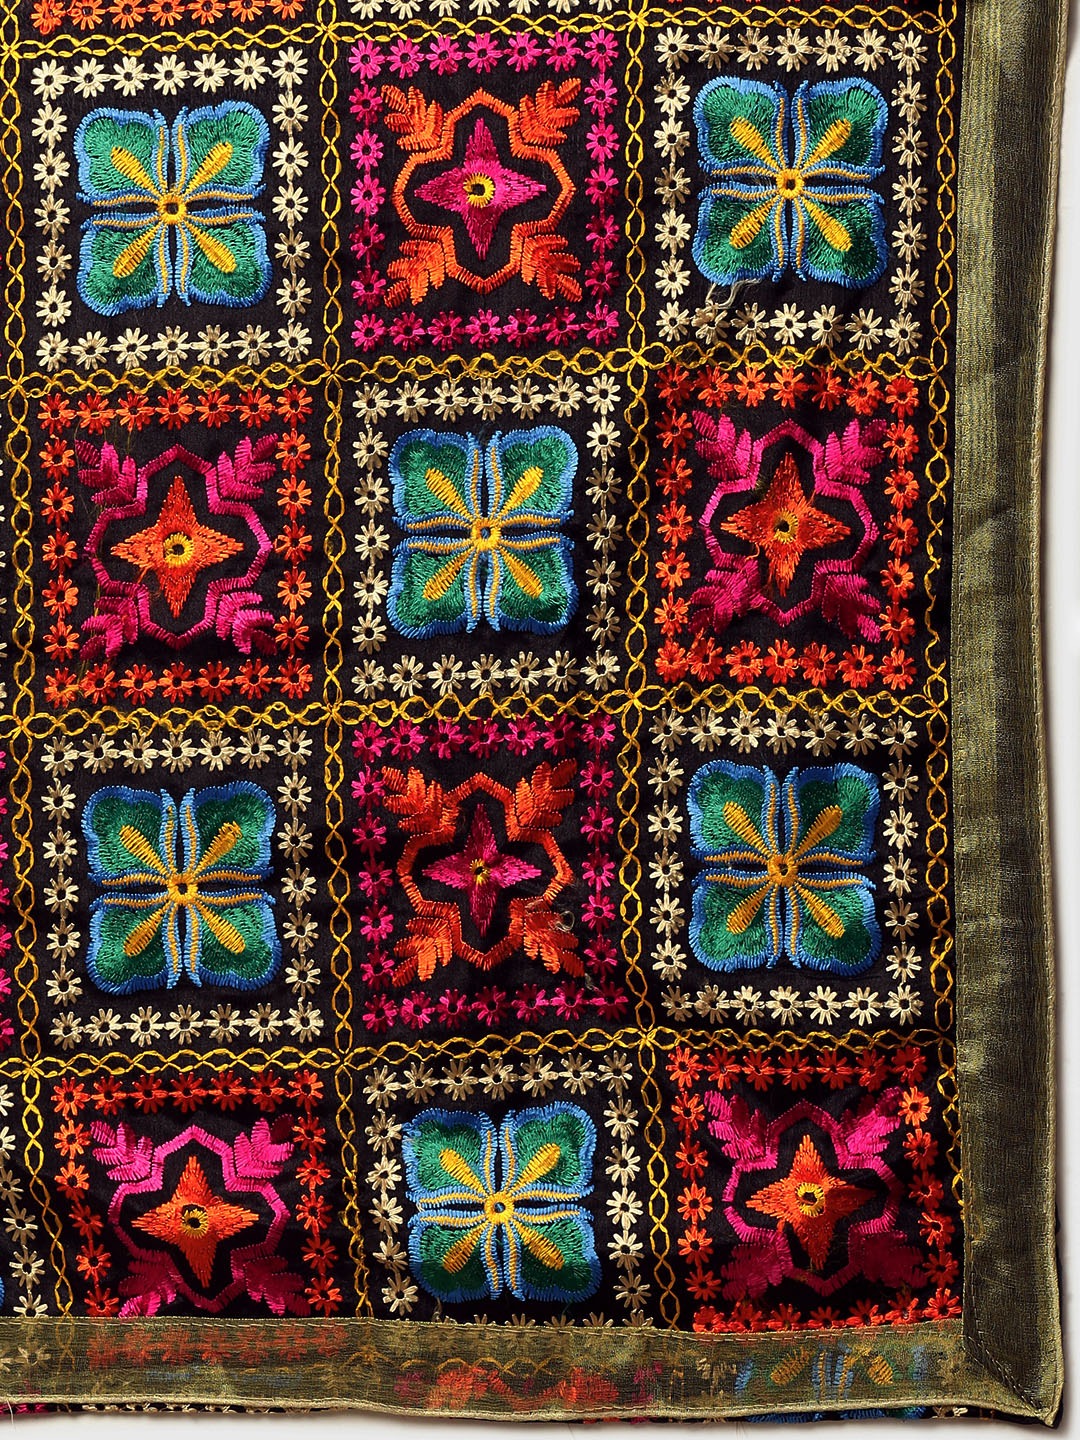 The Heavy Embroidered Phulukari Dupatta